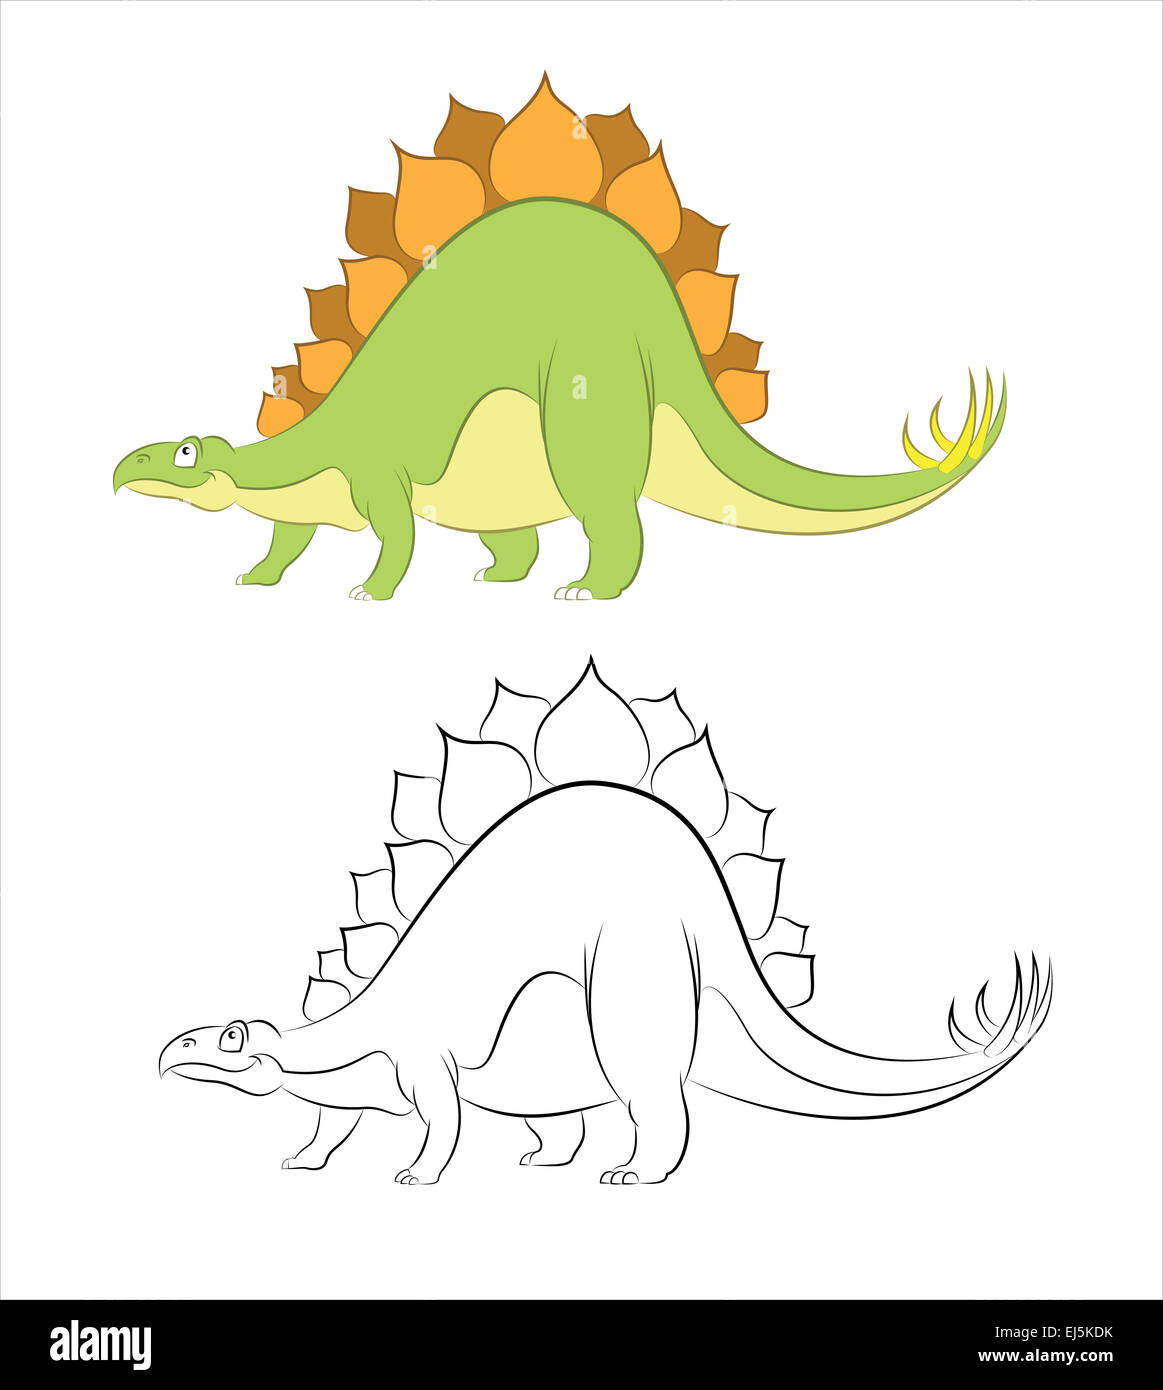 Image Vecteur de funny cartoon dinosaure Stégosaure Banque D'Images